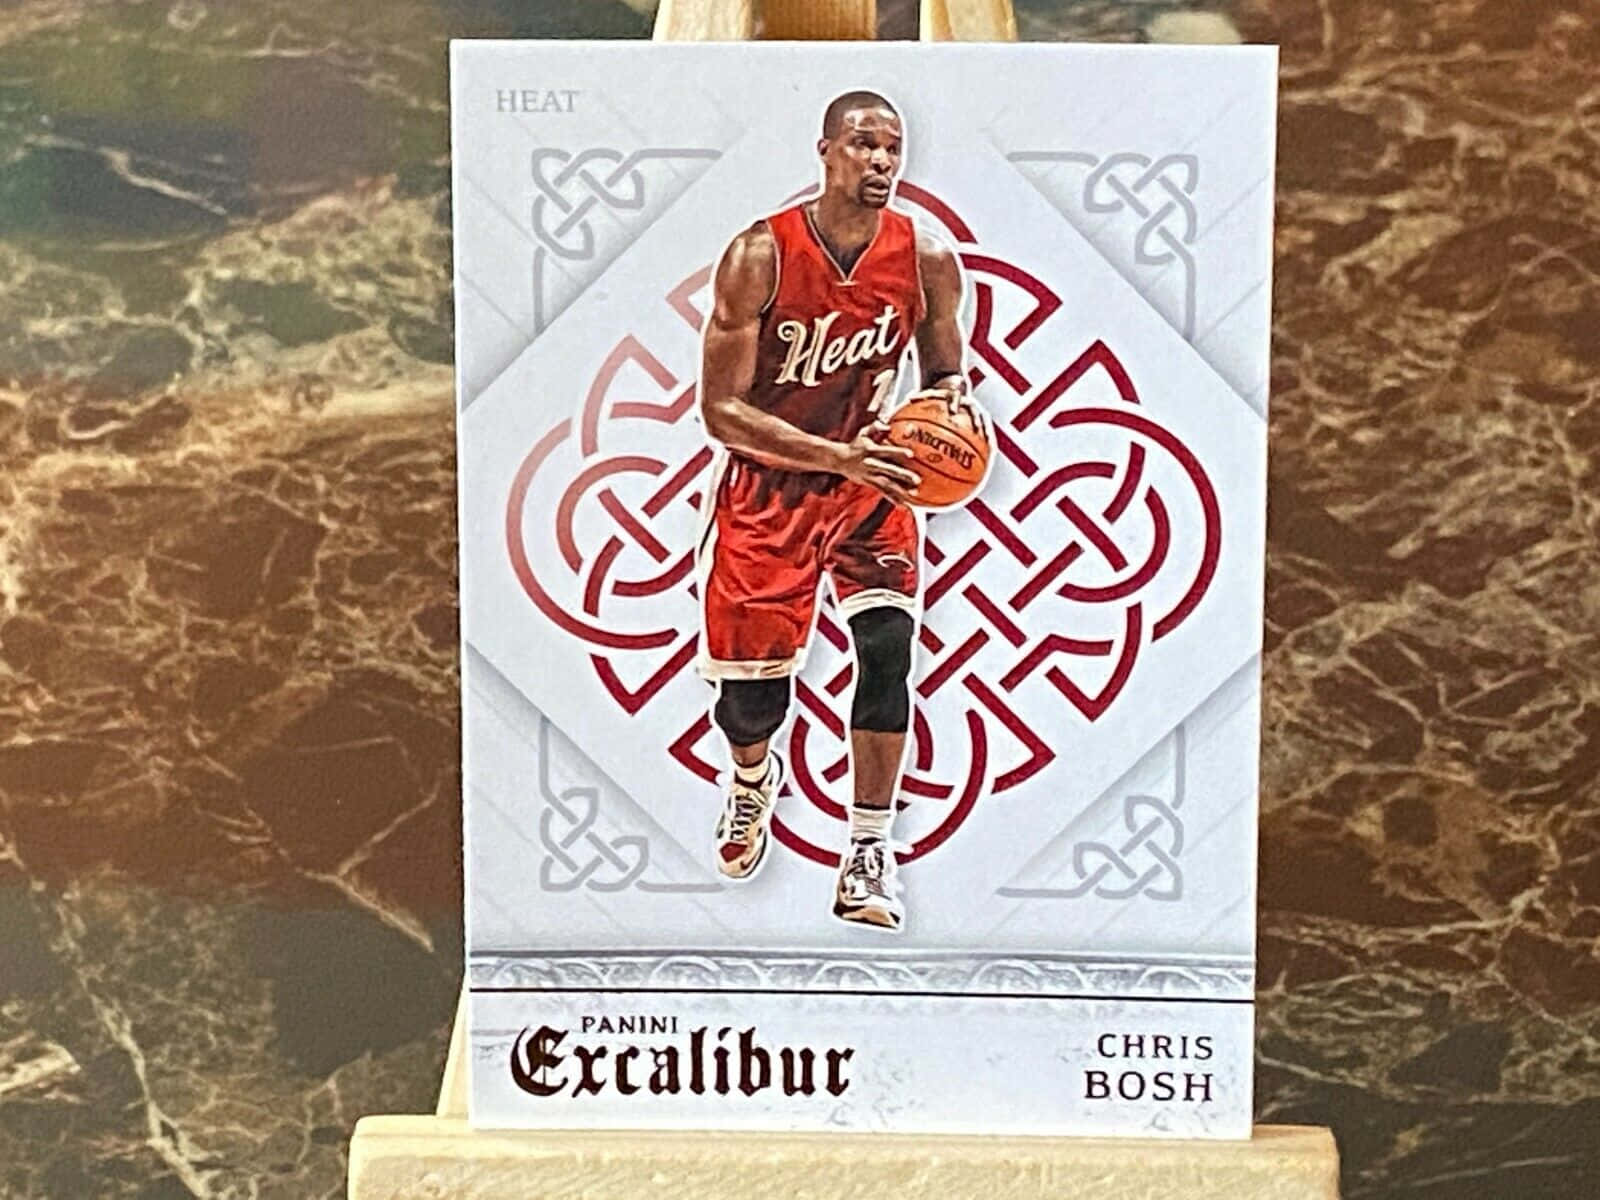 Panini Excalibur Chris Bosh Basketball Card Wallpaper